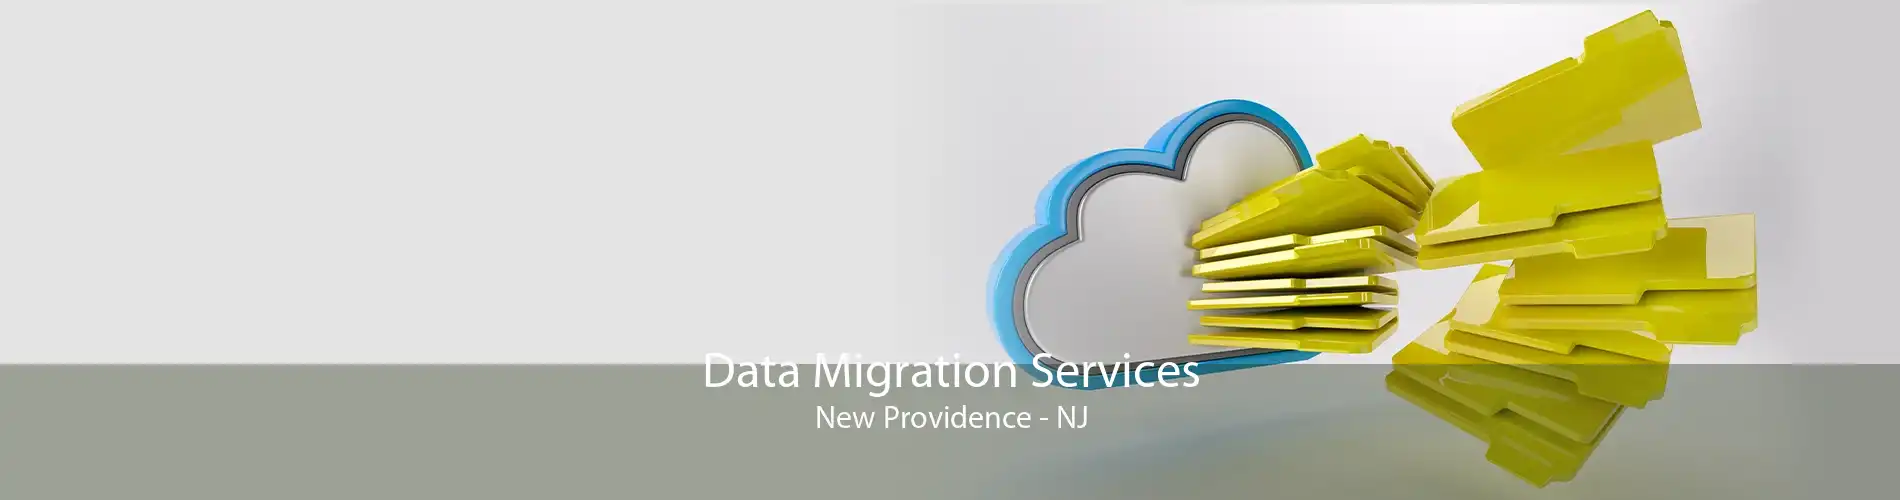 Data Migration Services New Providence - NJ